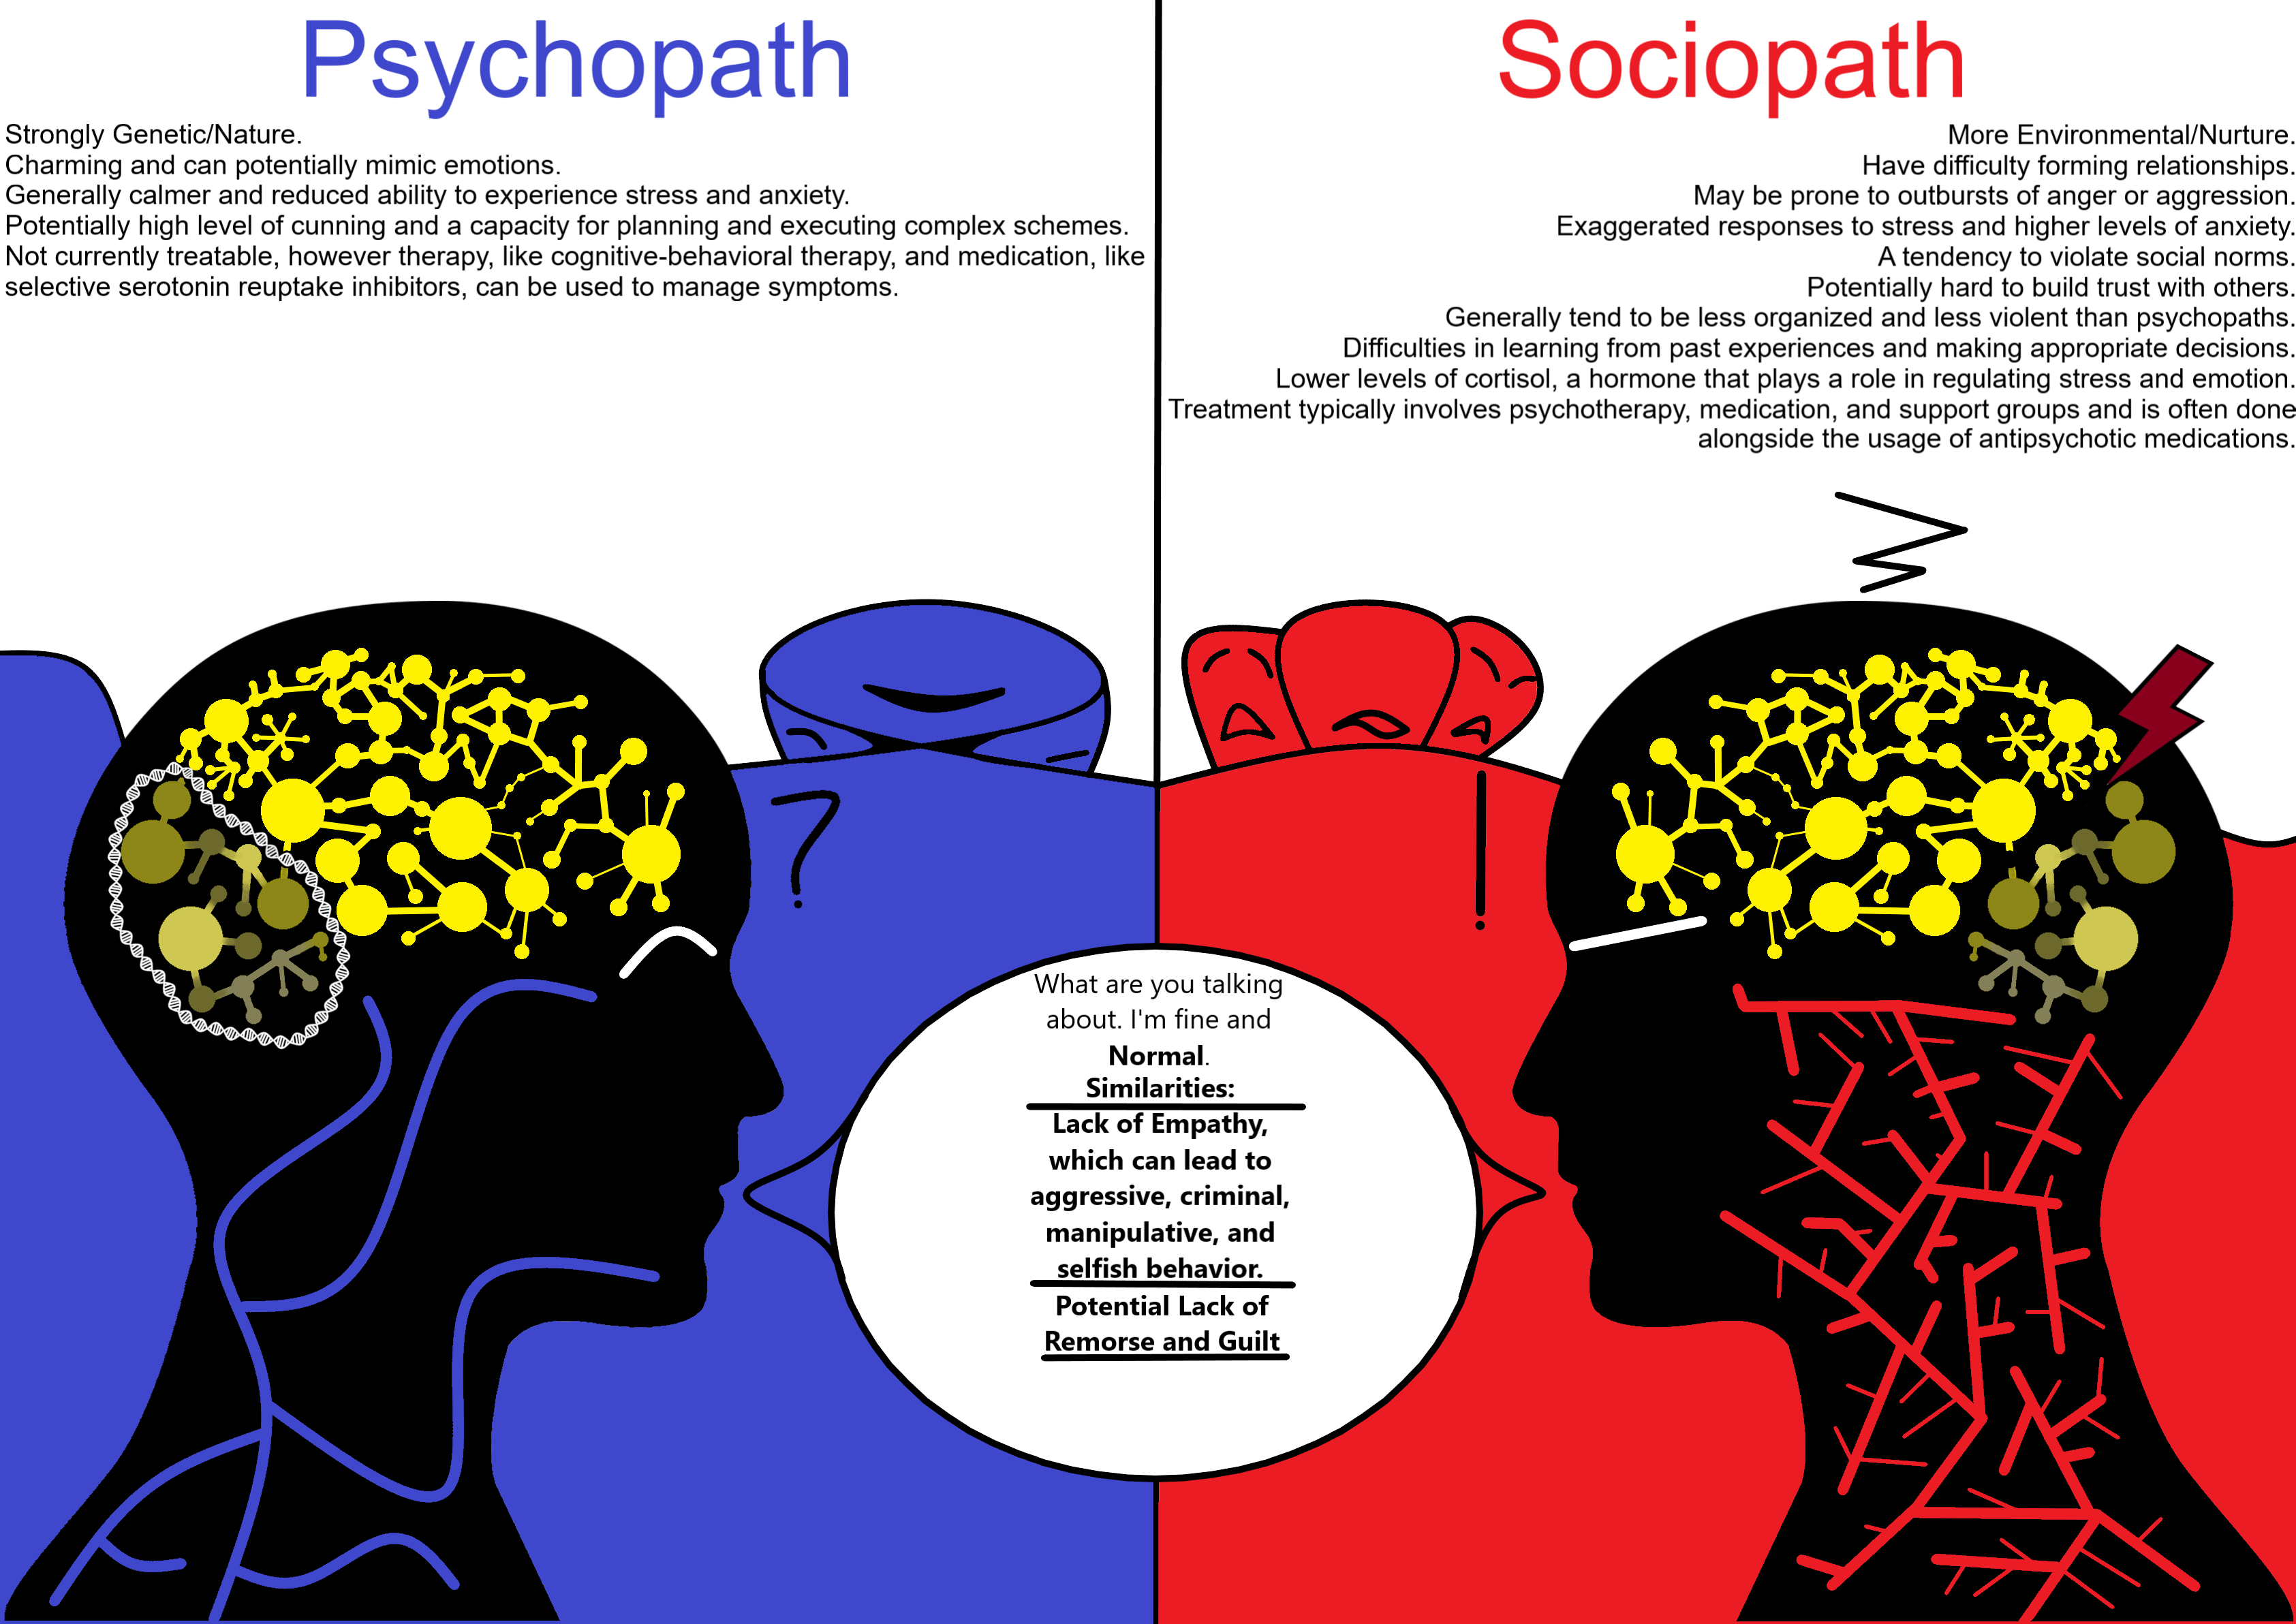 Visual Presentation by Carlos Herrera The project Name is Psychopathy Vs  Sociopathy